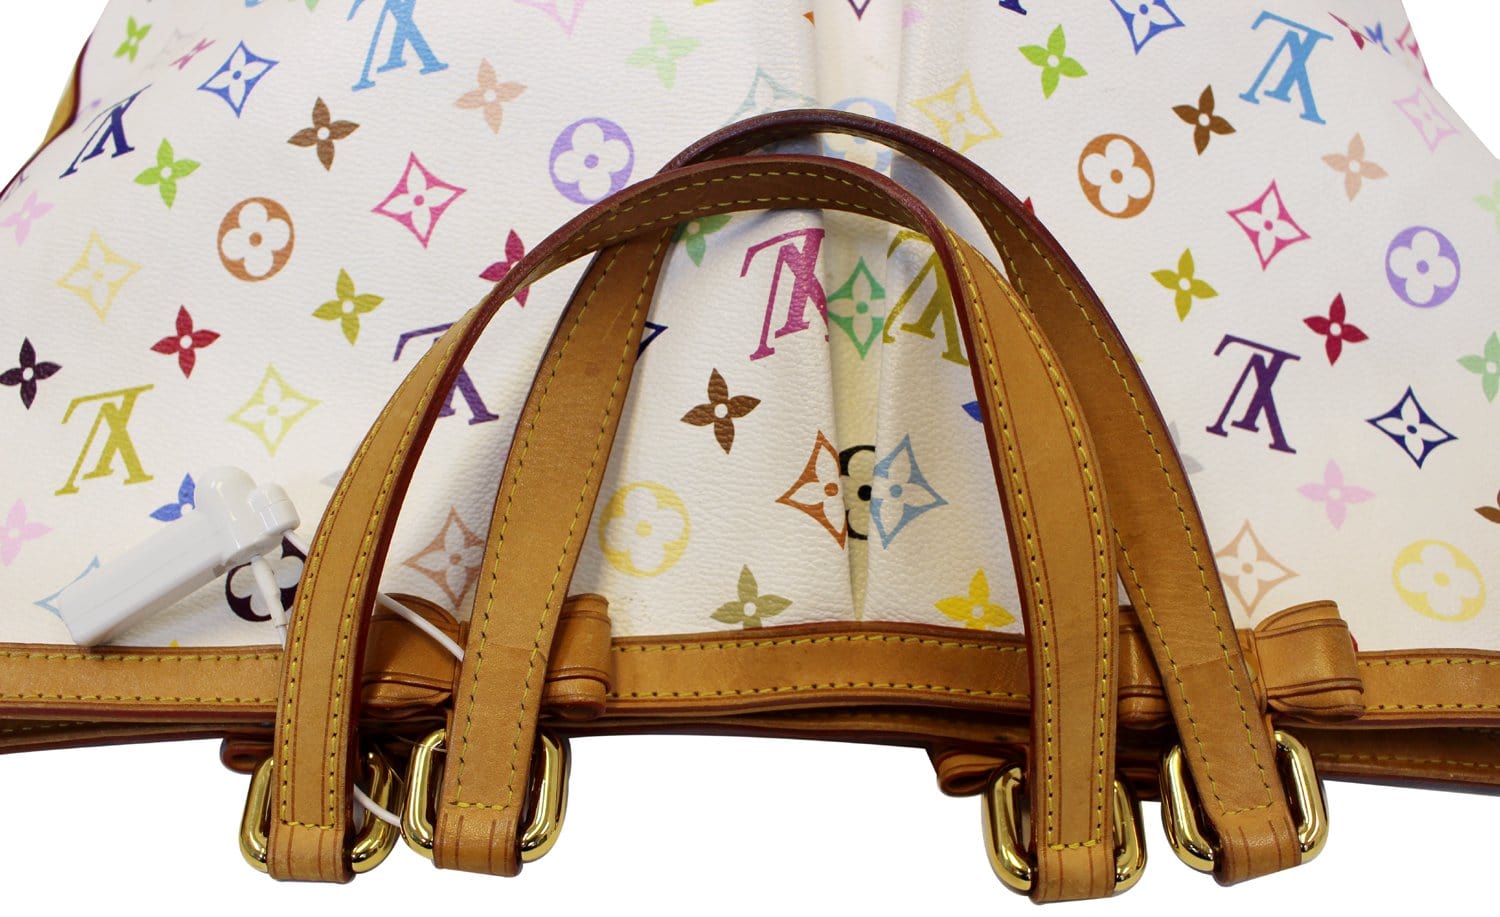 Sharleen MM Multicolor Monogram – Keeks Designer Handbags